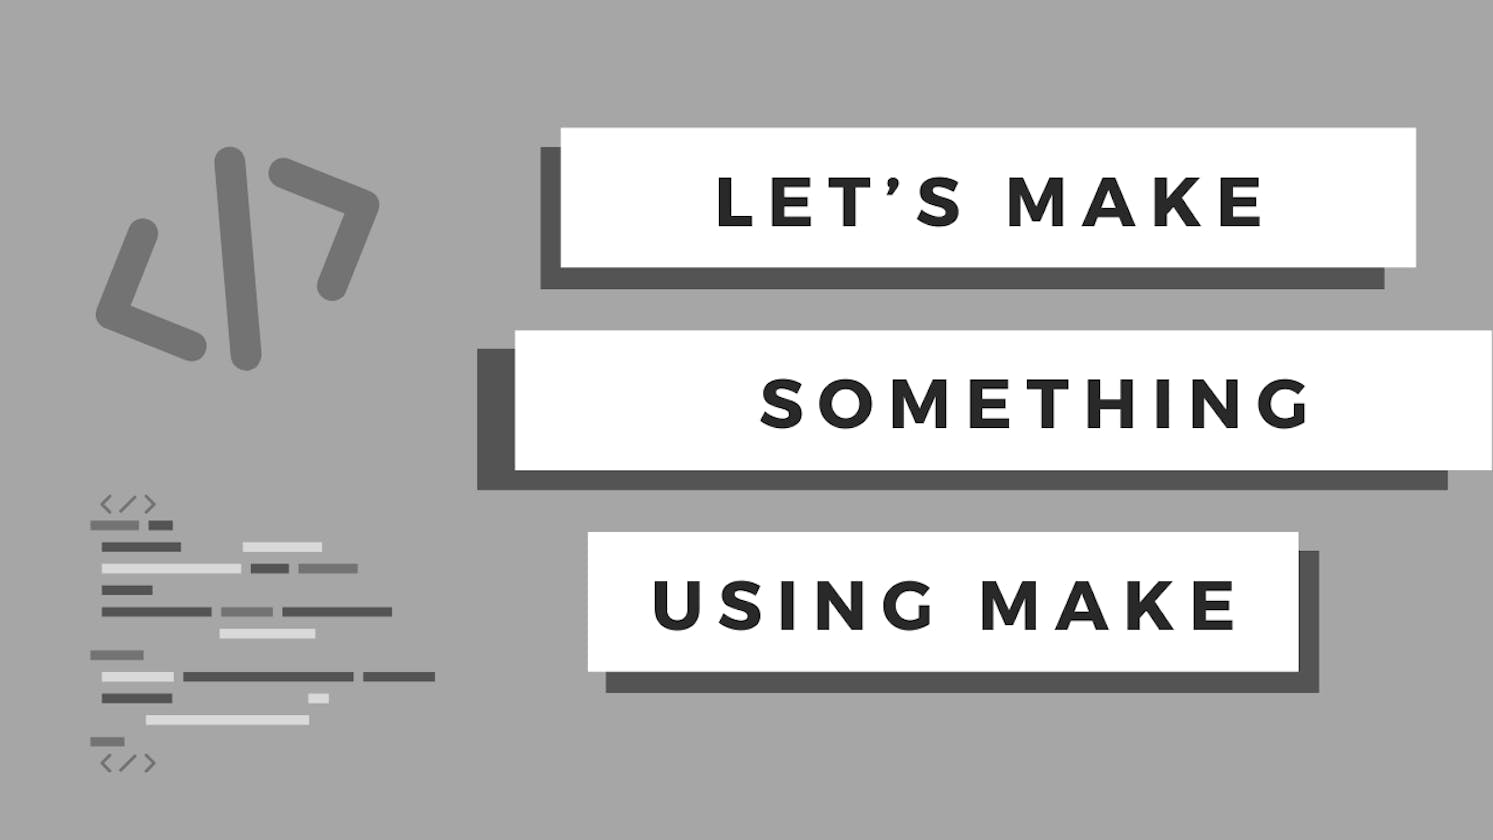 Let's make something by make